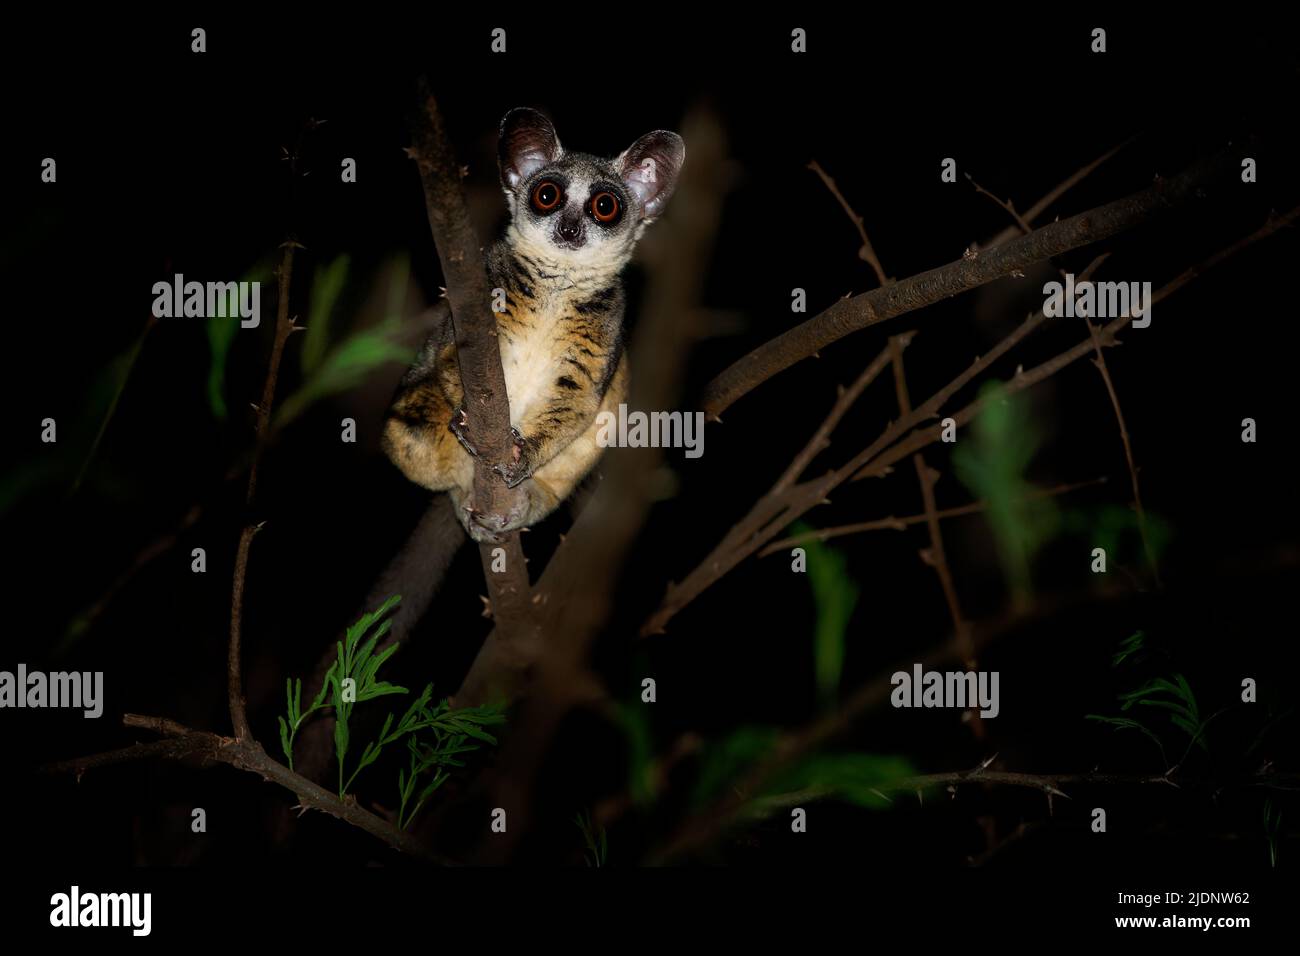 Senegal bushbaby - Galago senegalensis also Senegal galago, Lesser galago or Lesser bush baby, small nocturnal primate family Galagidae, large eyes, i Stock Photo